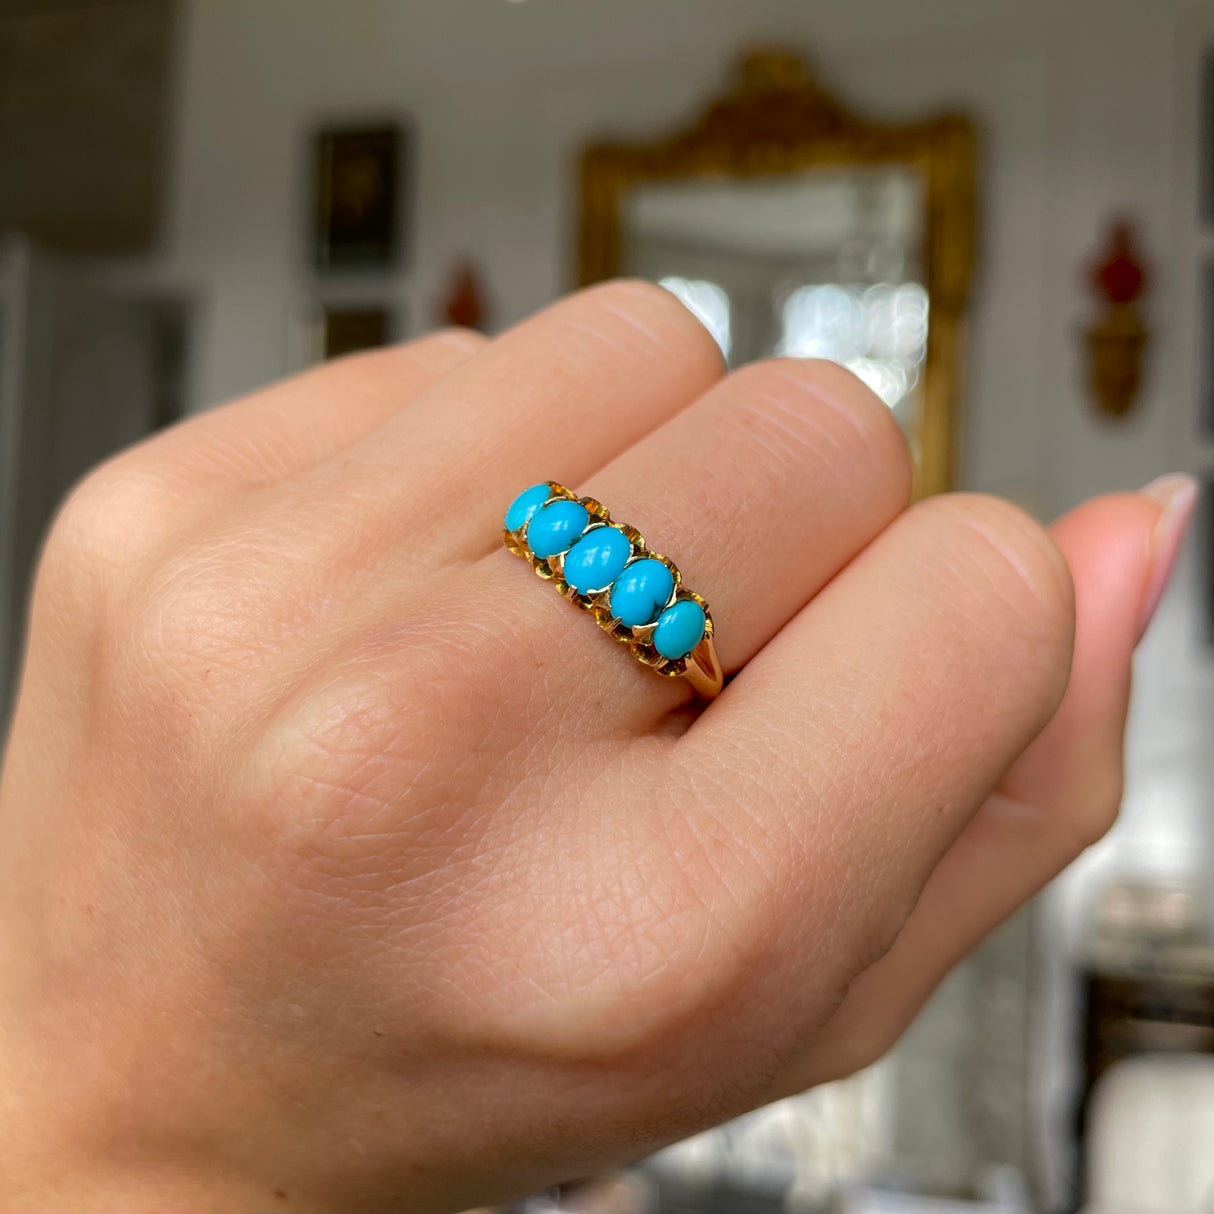 Victorian turquoise half hoop ring, worn on hand.